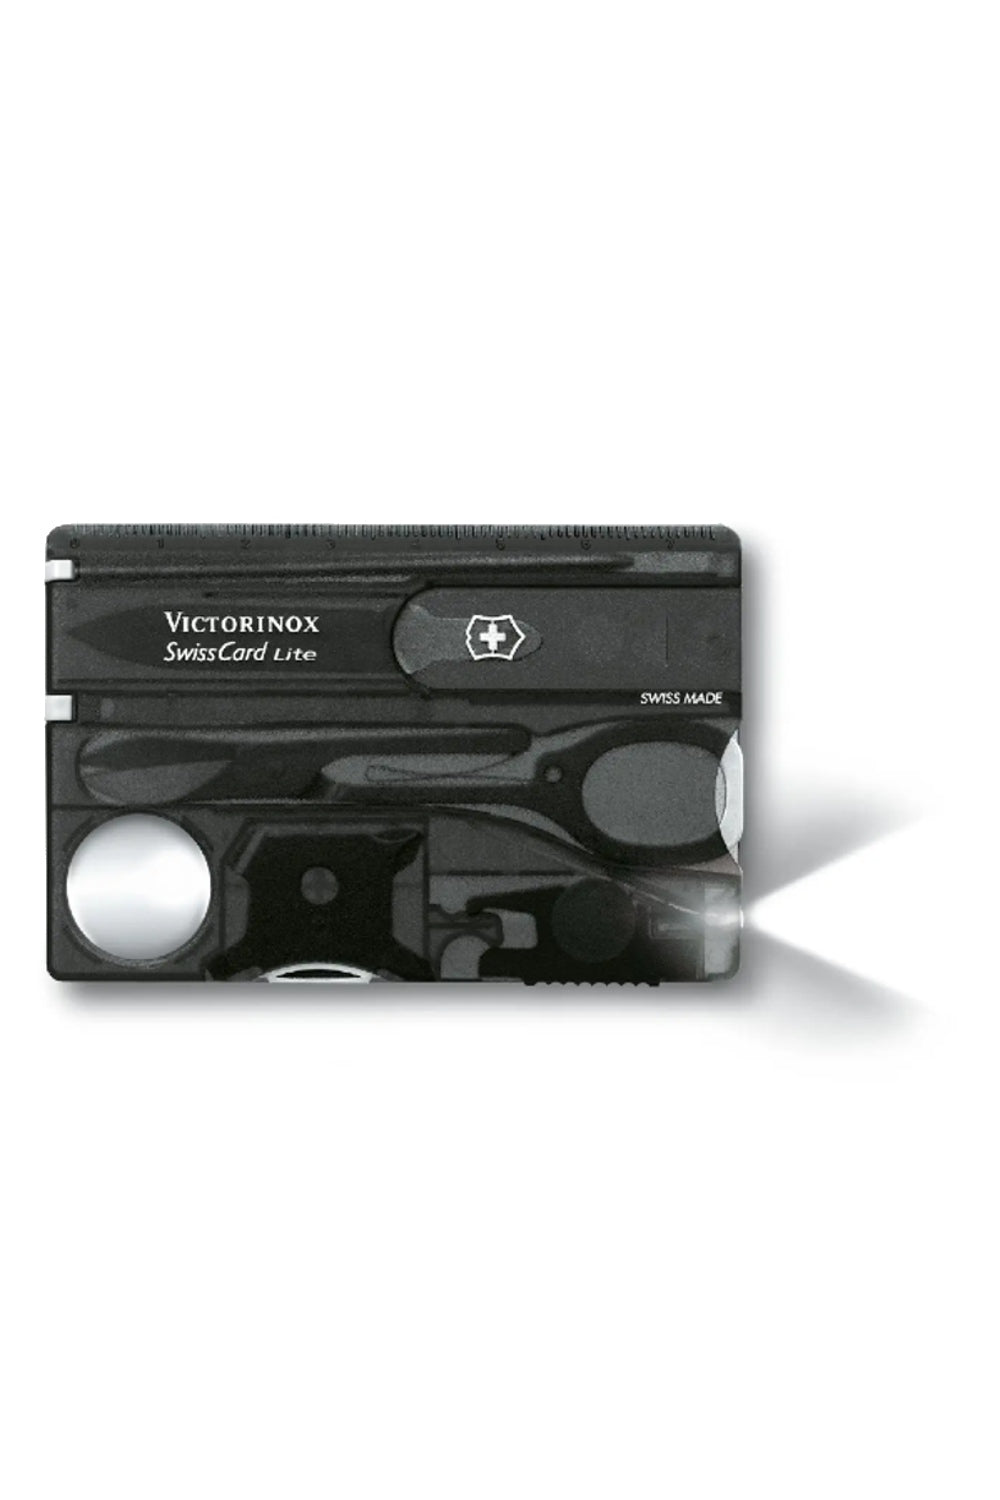 Victorinox Swiss Card Lite in Black Transparent 